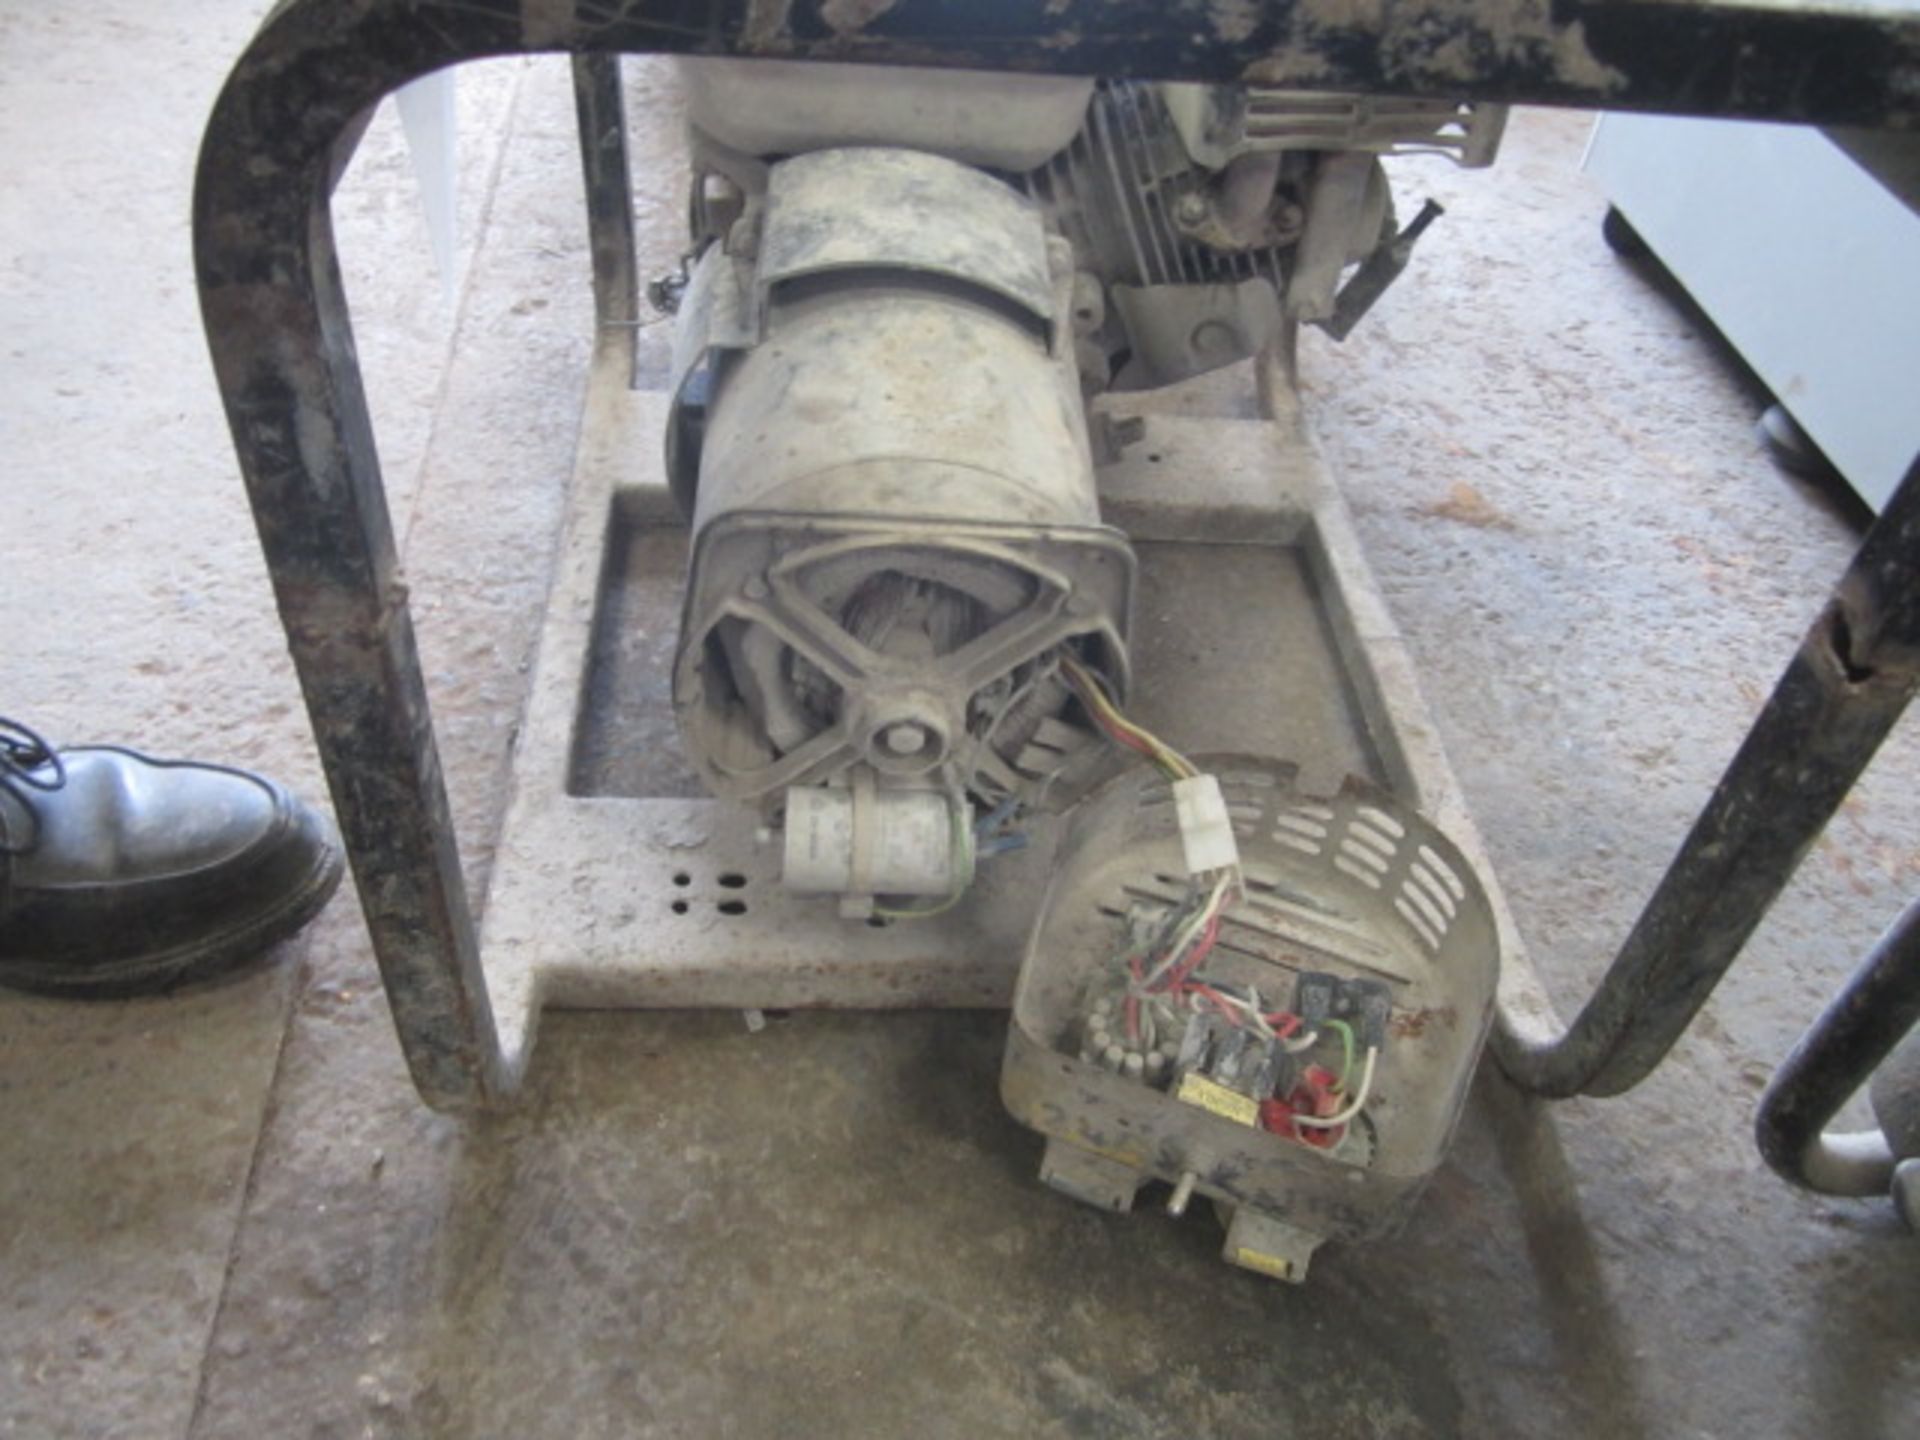 Uubadged portable petrol generator with Honda GX160 engine - Image 4 of 4